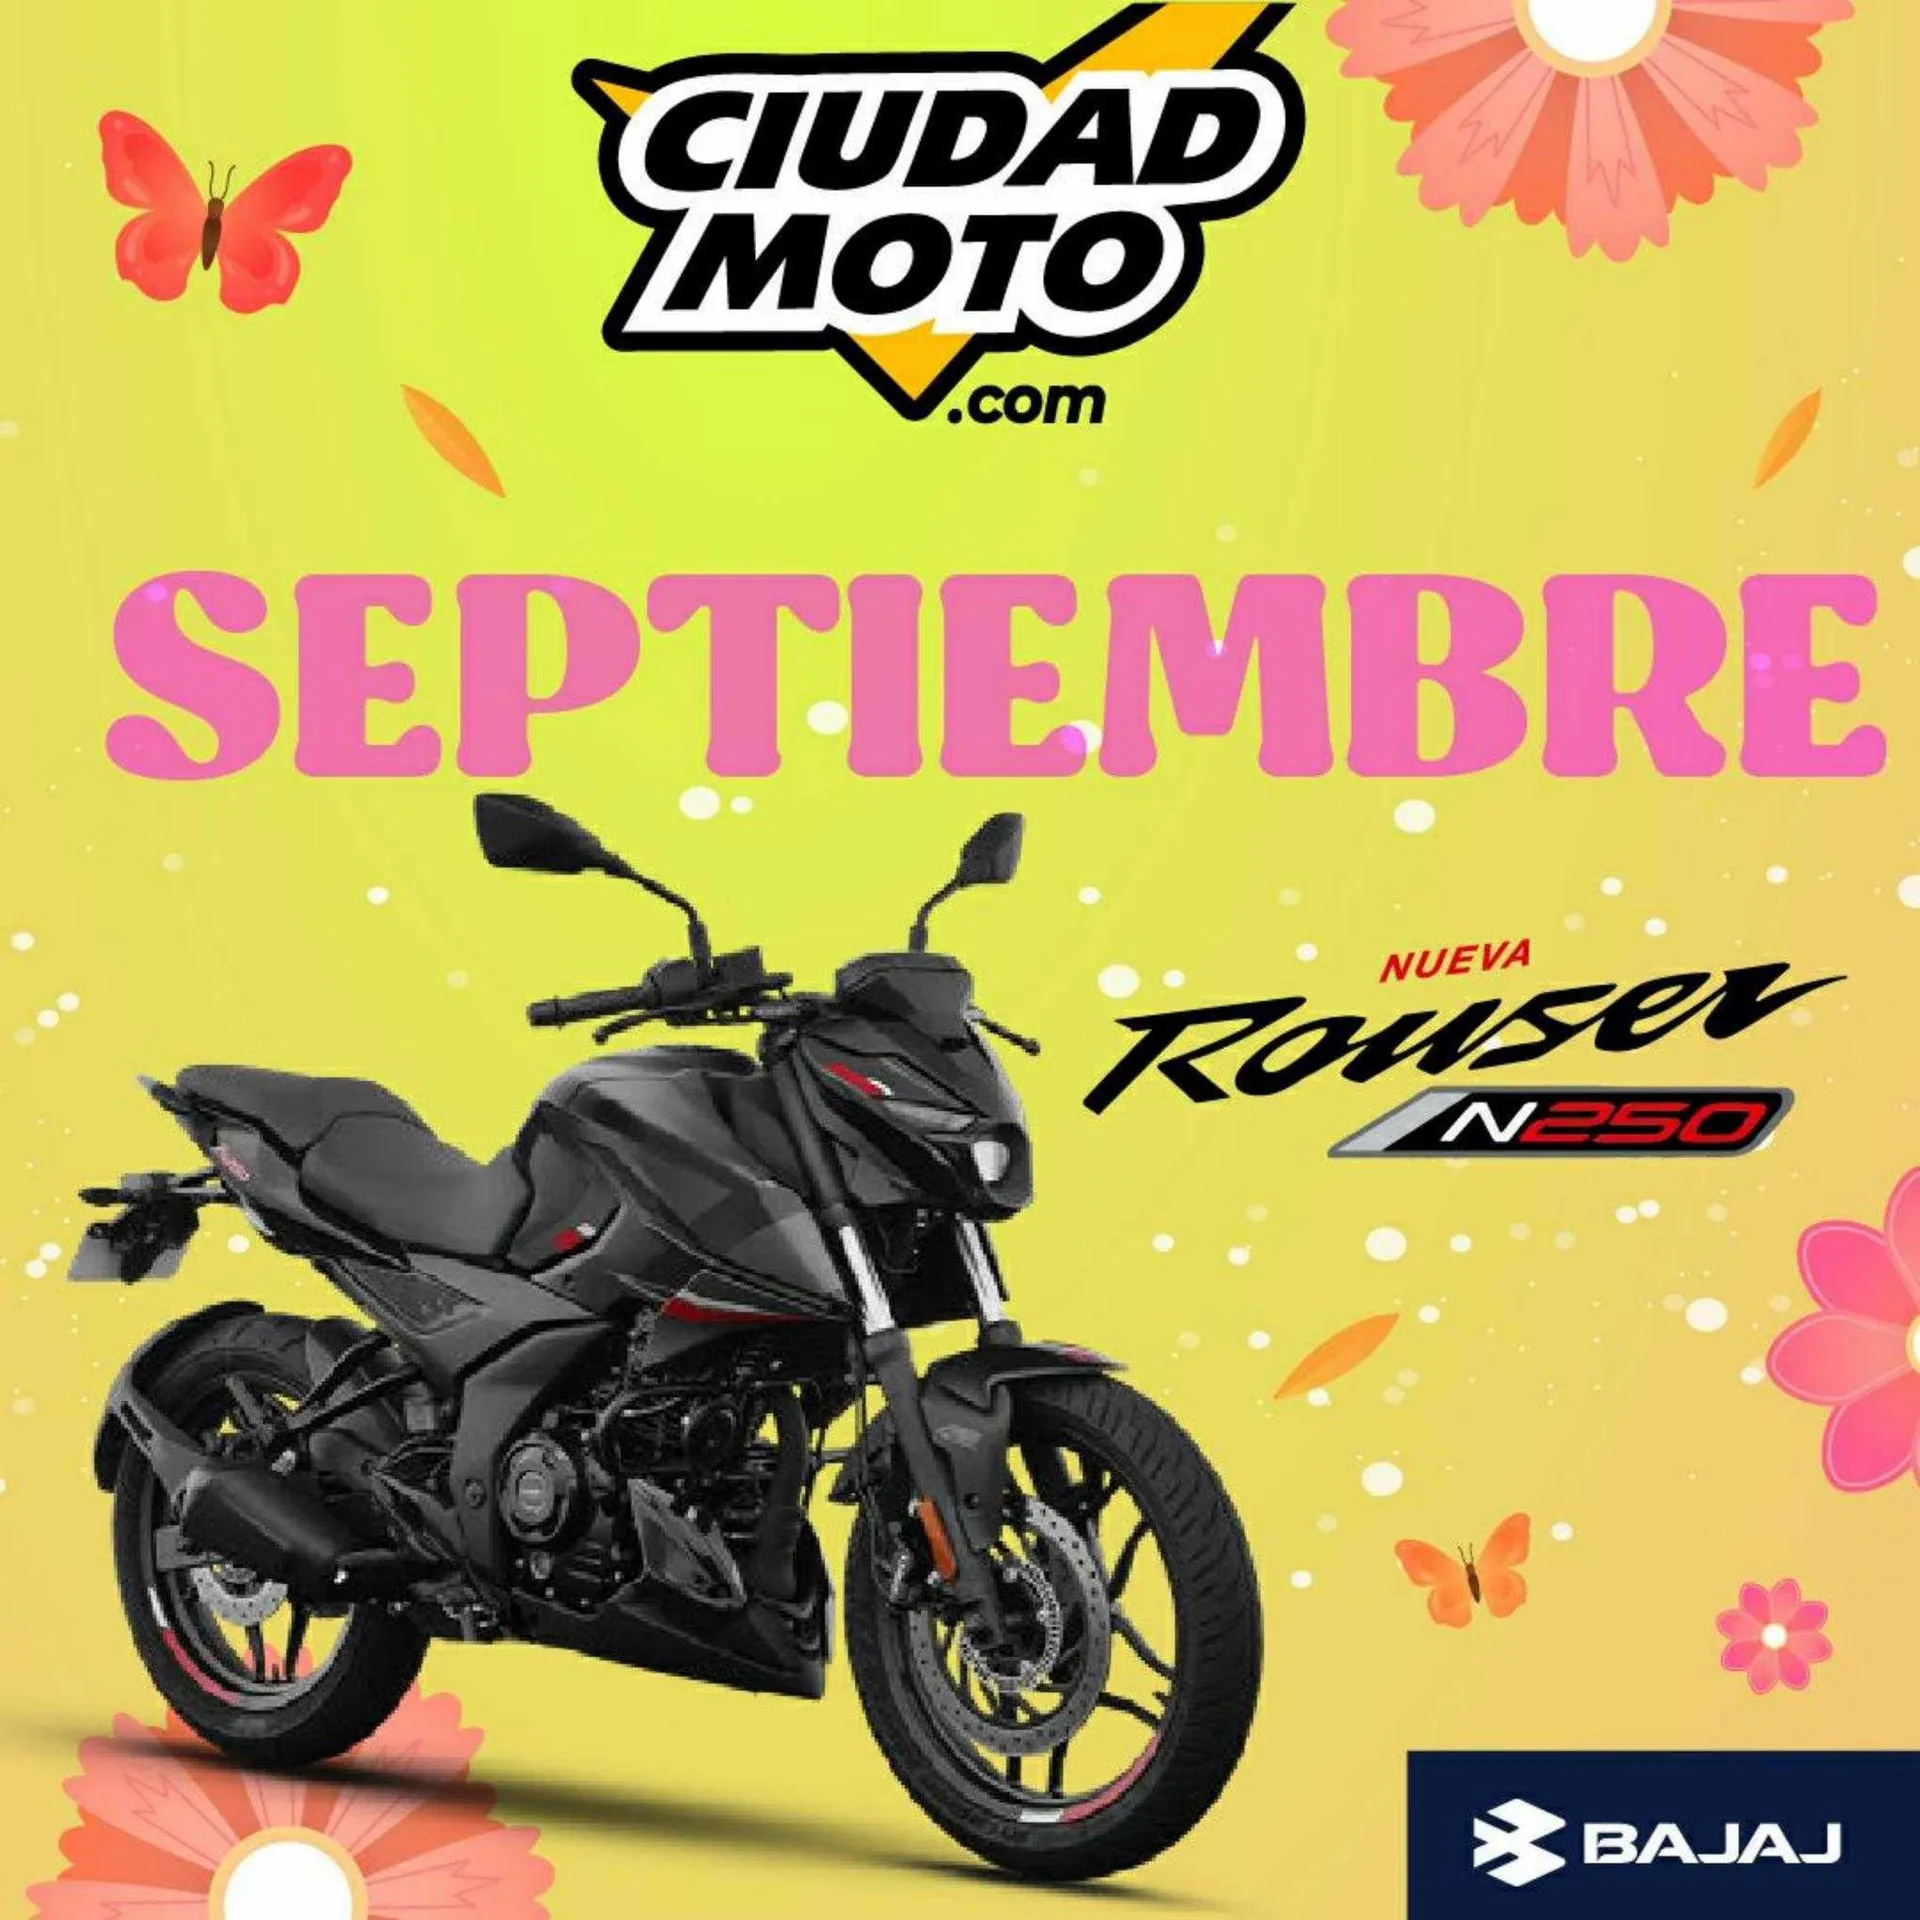 Catálogo Ciudad Moto